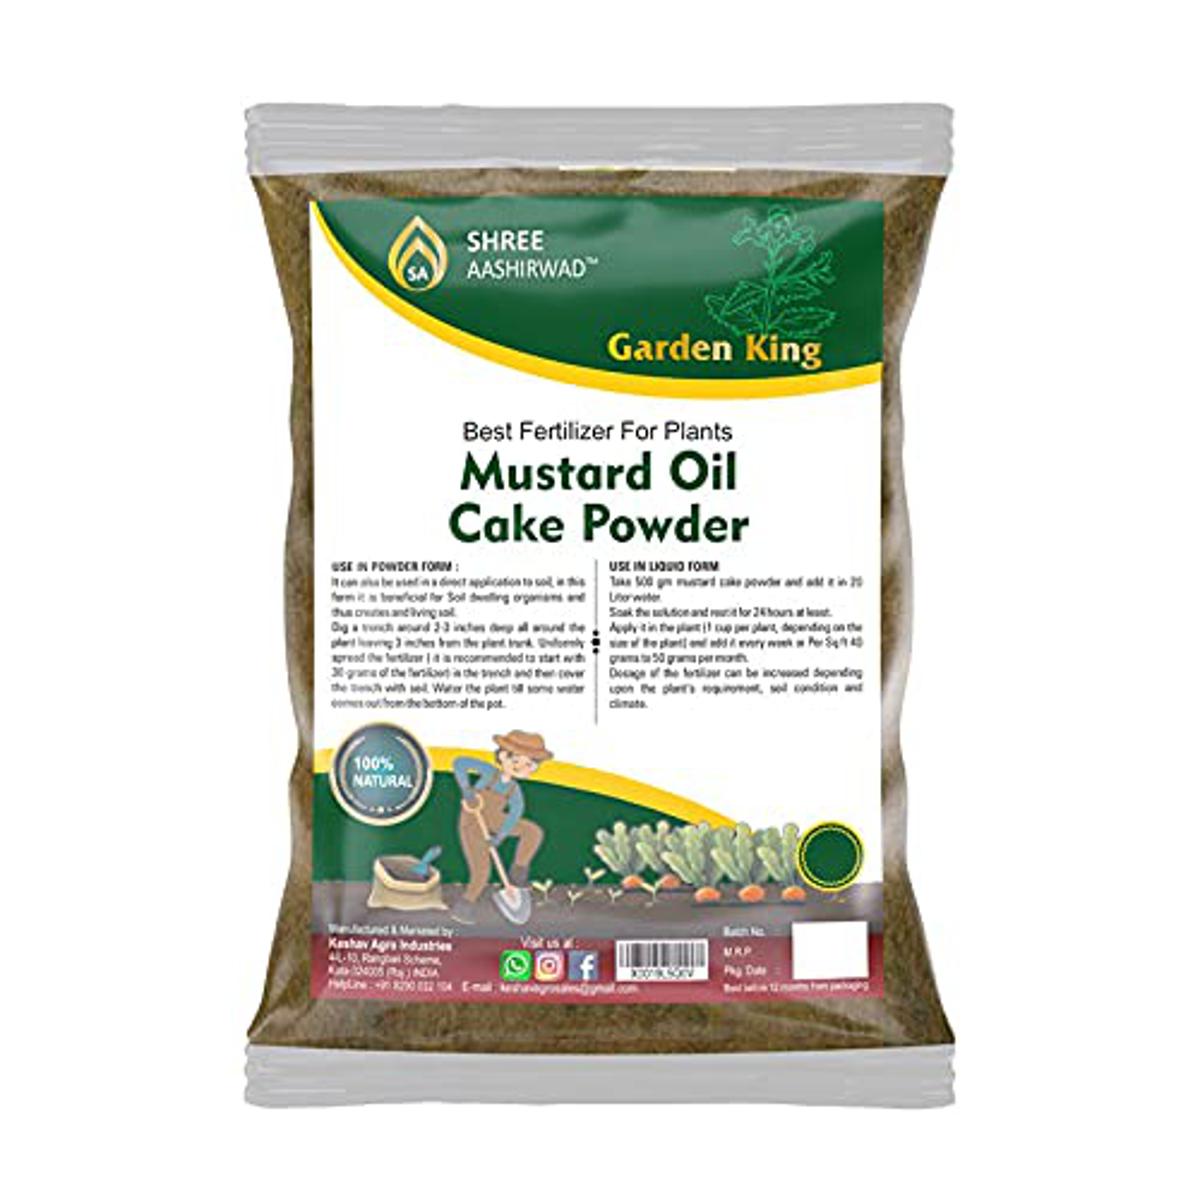 Mustard Oil Cake Powder Organic Fertilizer - 5 KG - Shree Aashirwad